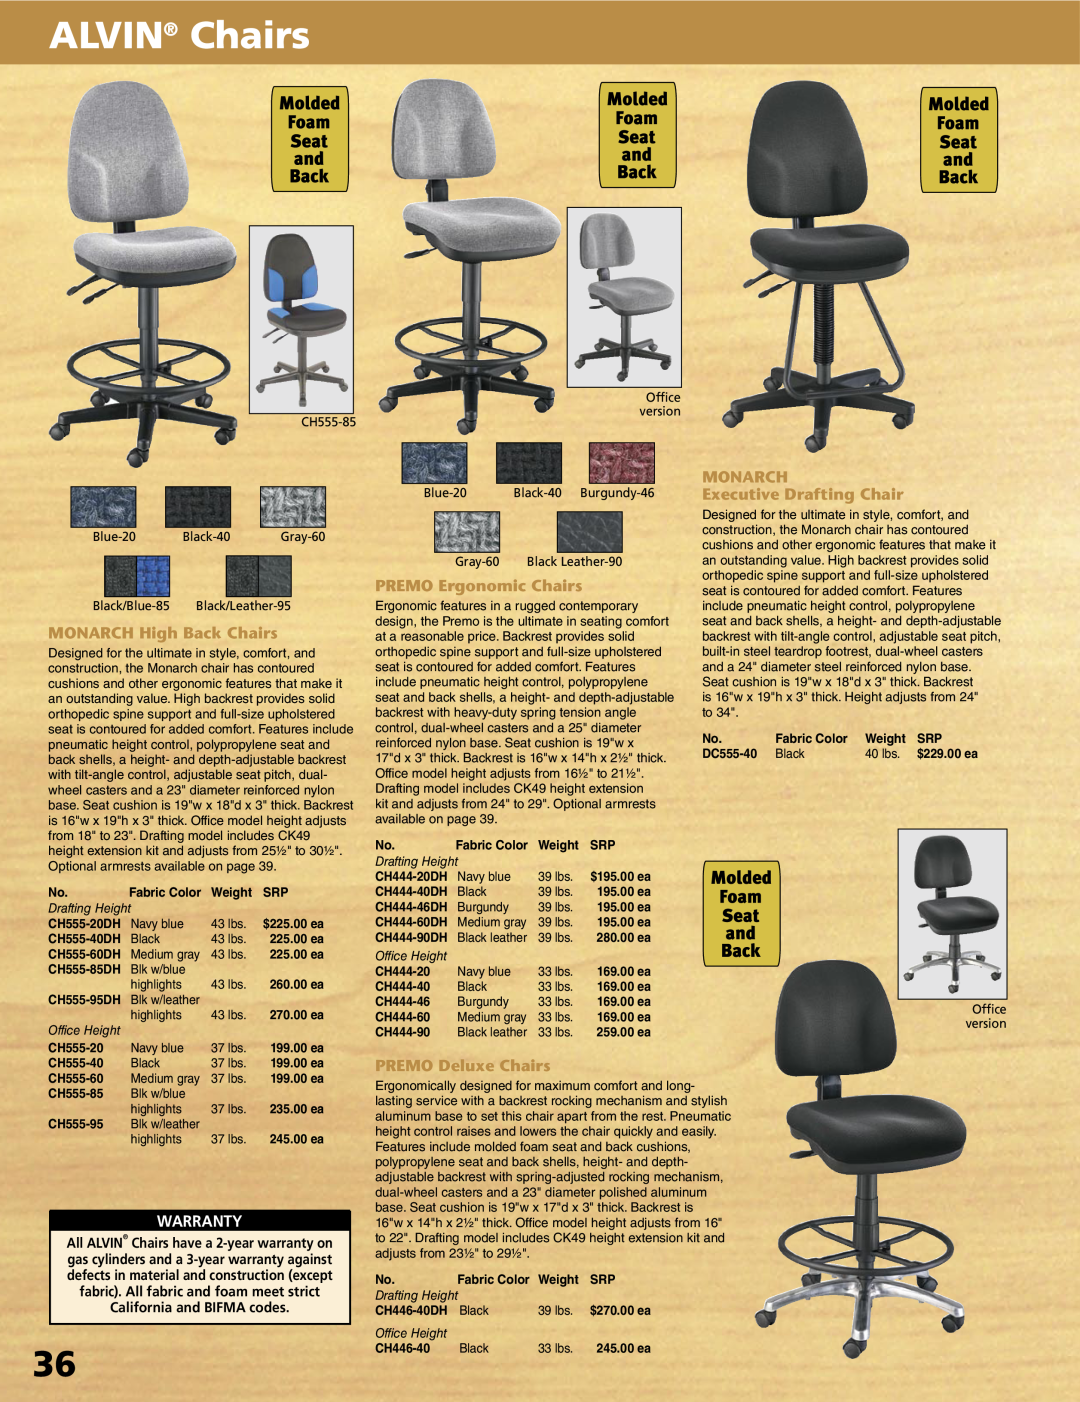 Alvin XX-4-XB ALVIN Chairs, MONARCH High Back Chairs, PREMO Ergonomic Chairs, Monarch Executive Drafting Chair, Warranty 